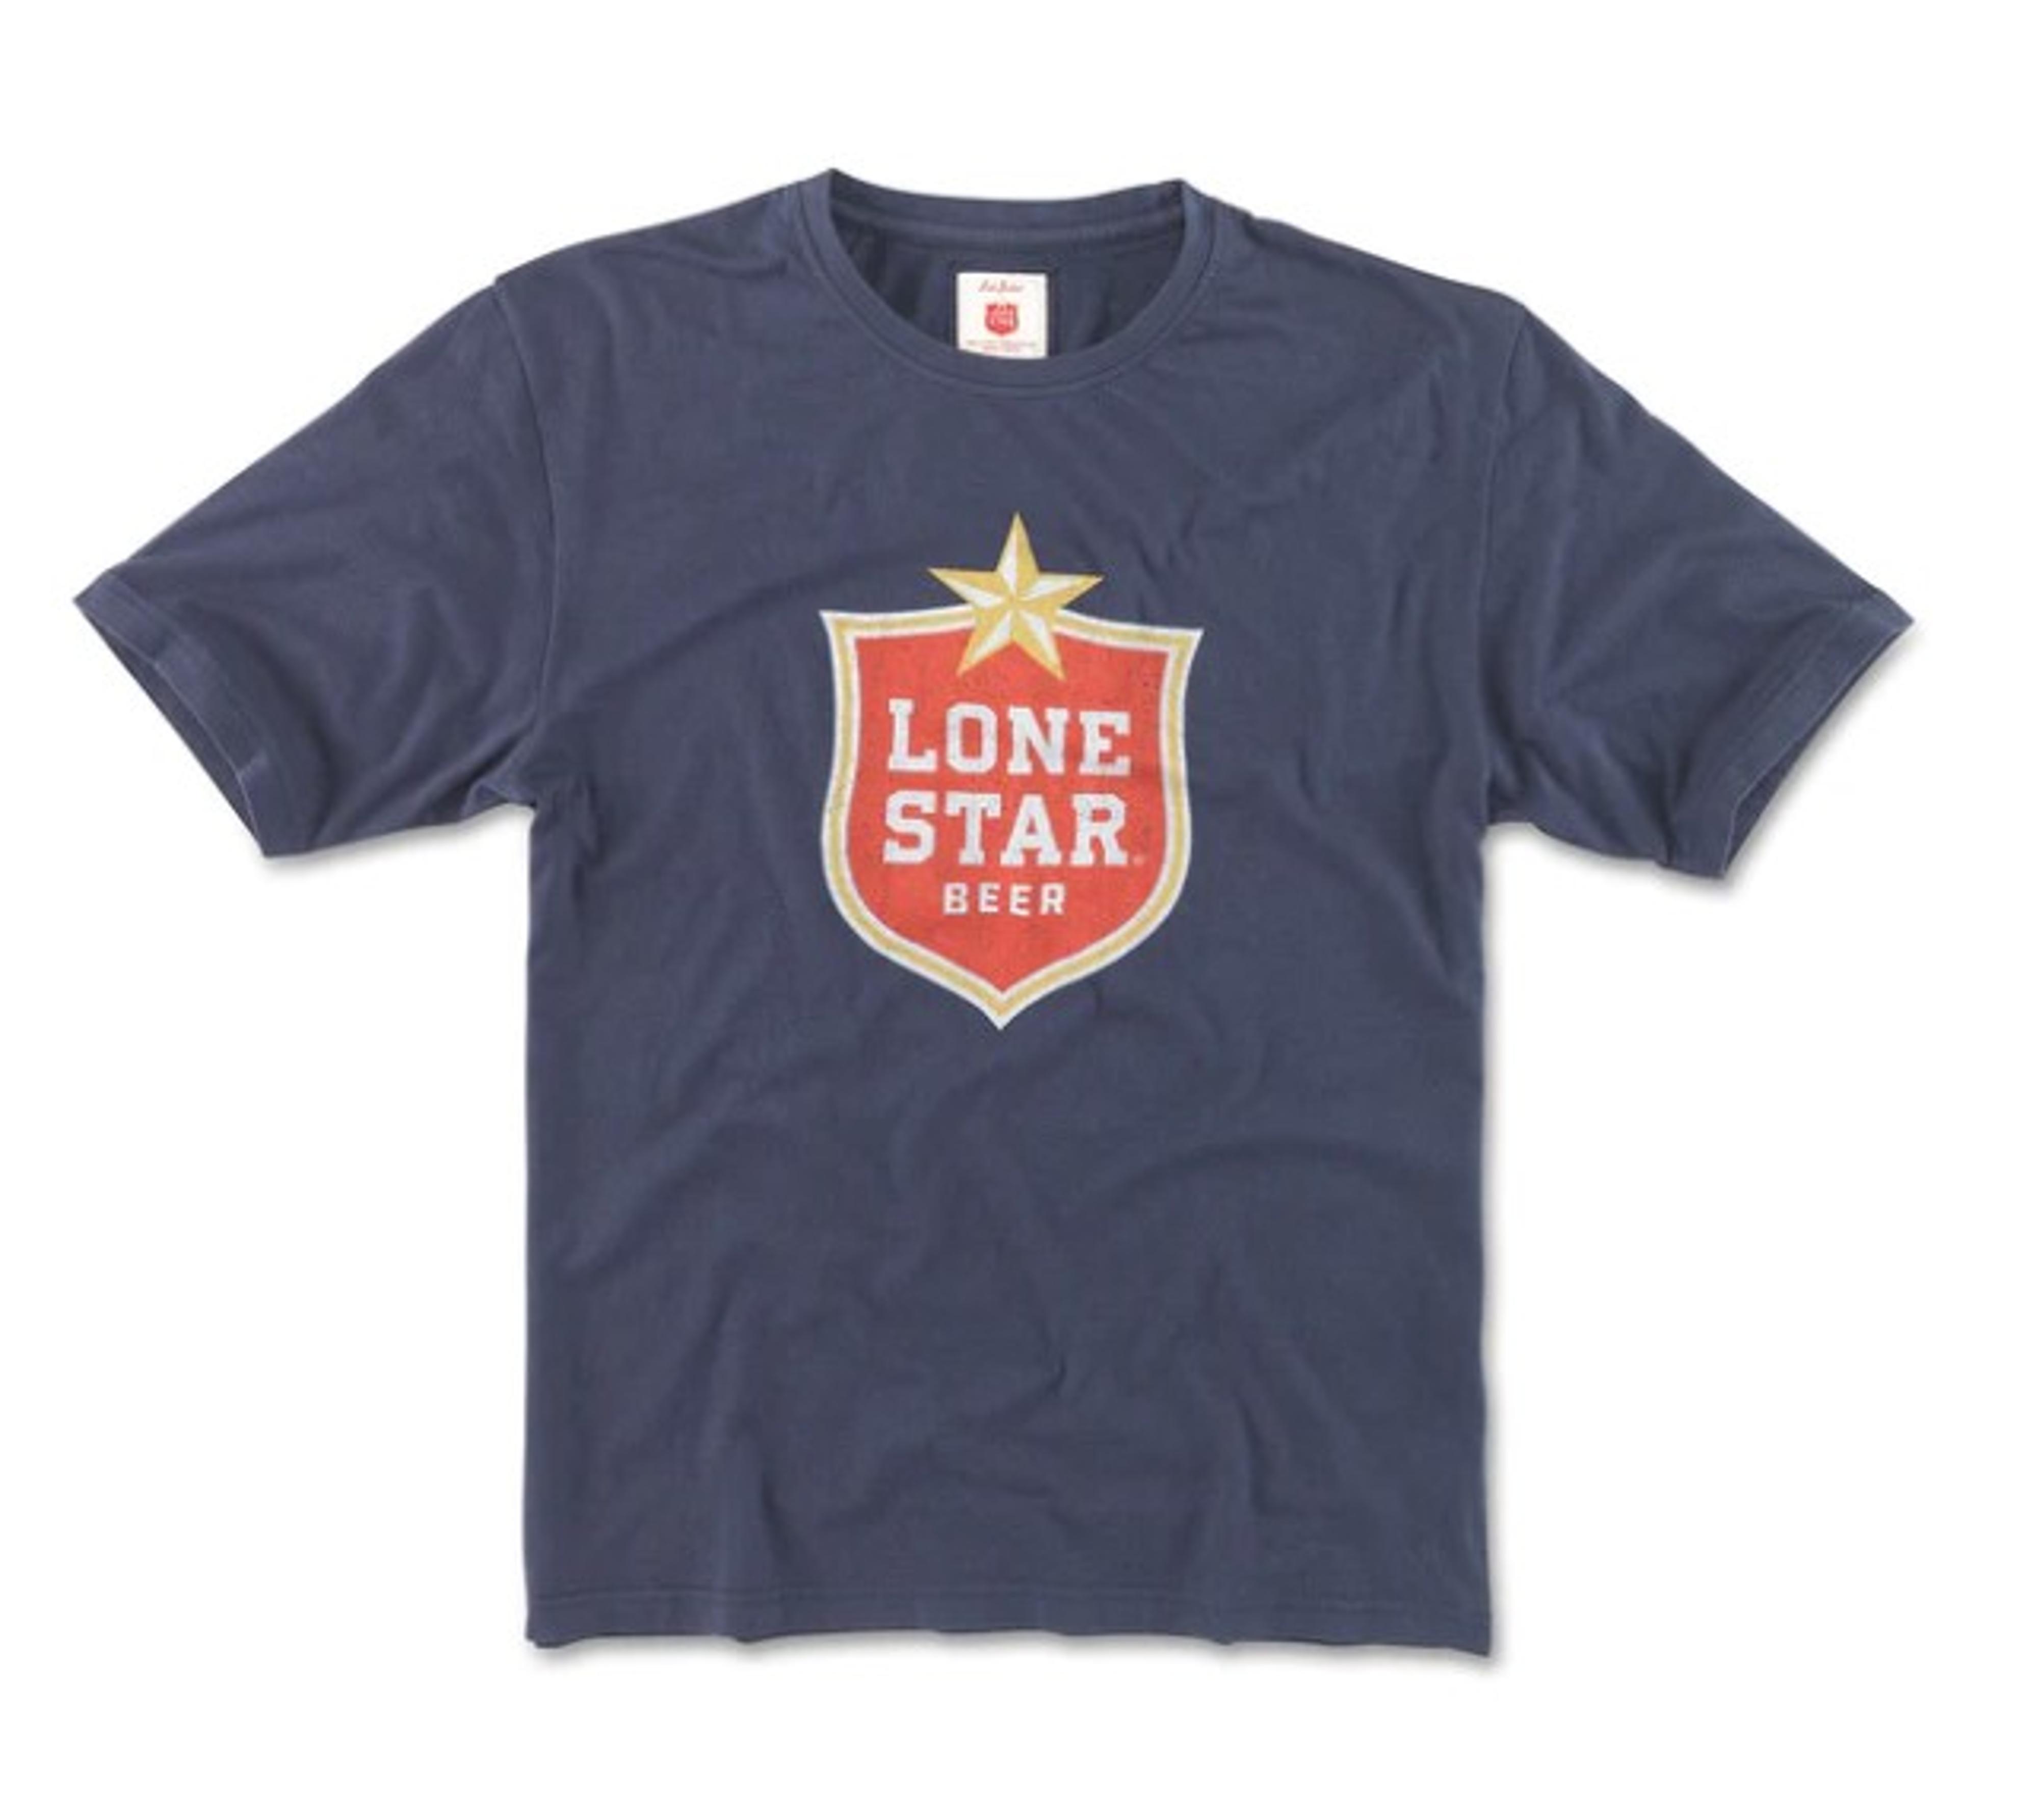  Lone Star Ss T- Shirt